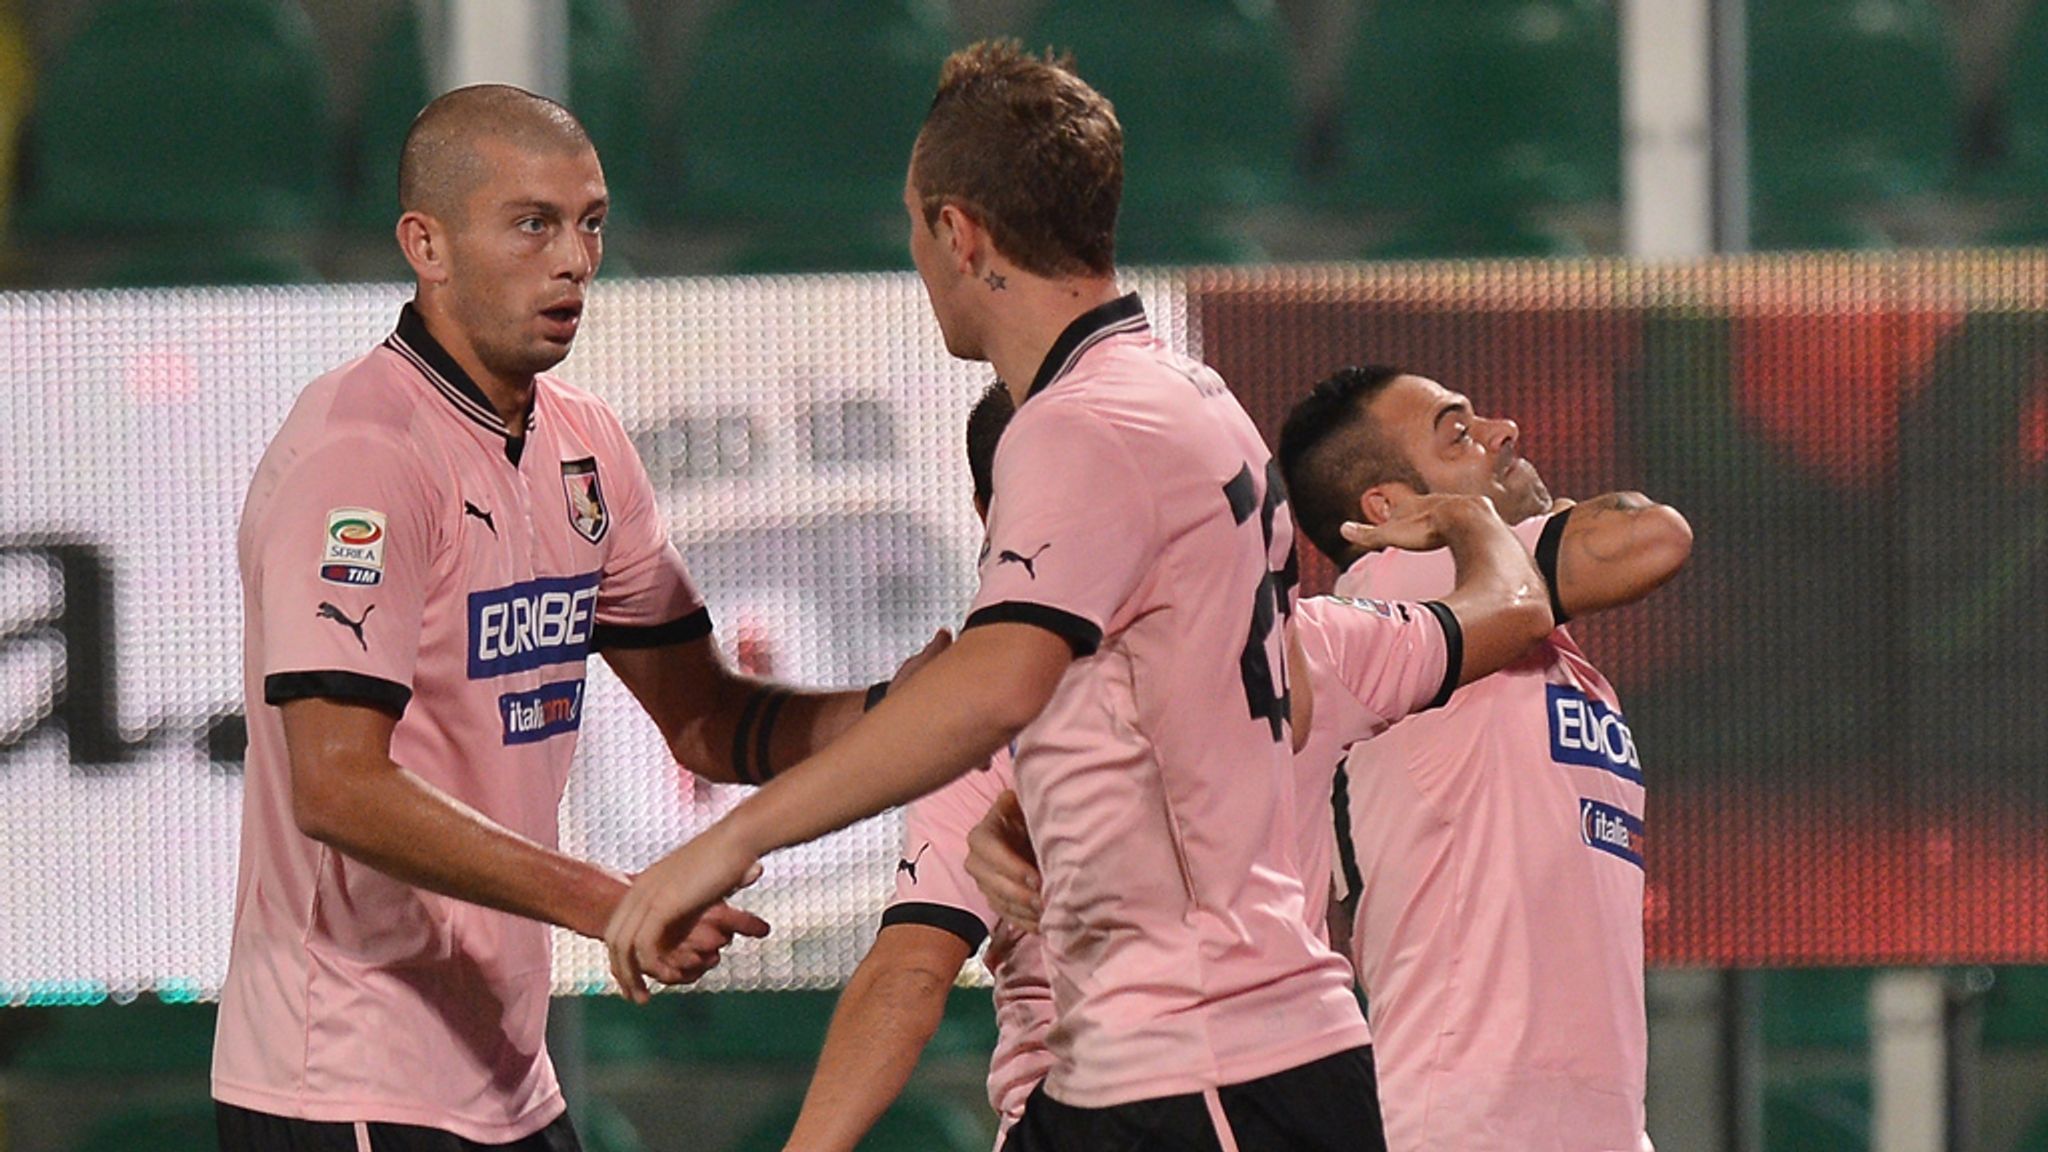 Wallpaper football club, Series A, Palermo, Palermo, Pink-black